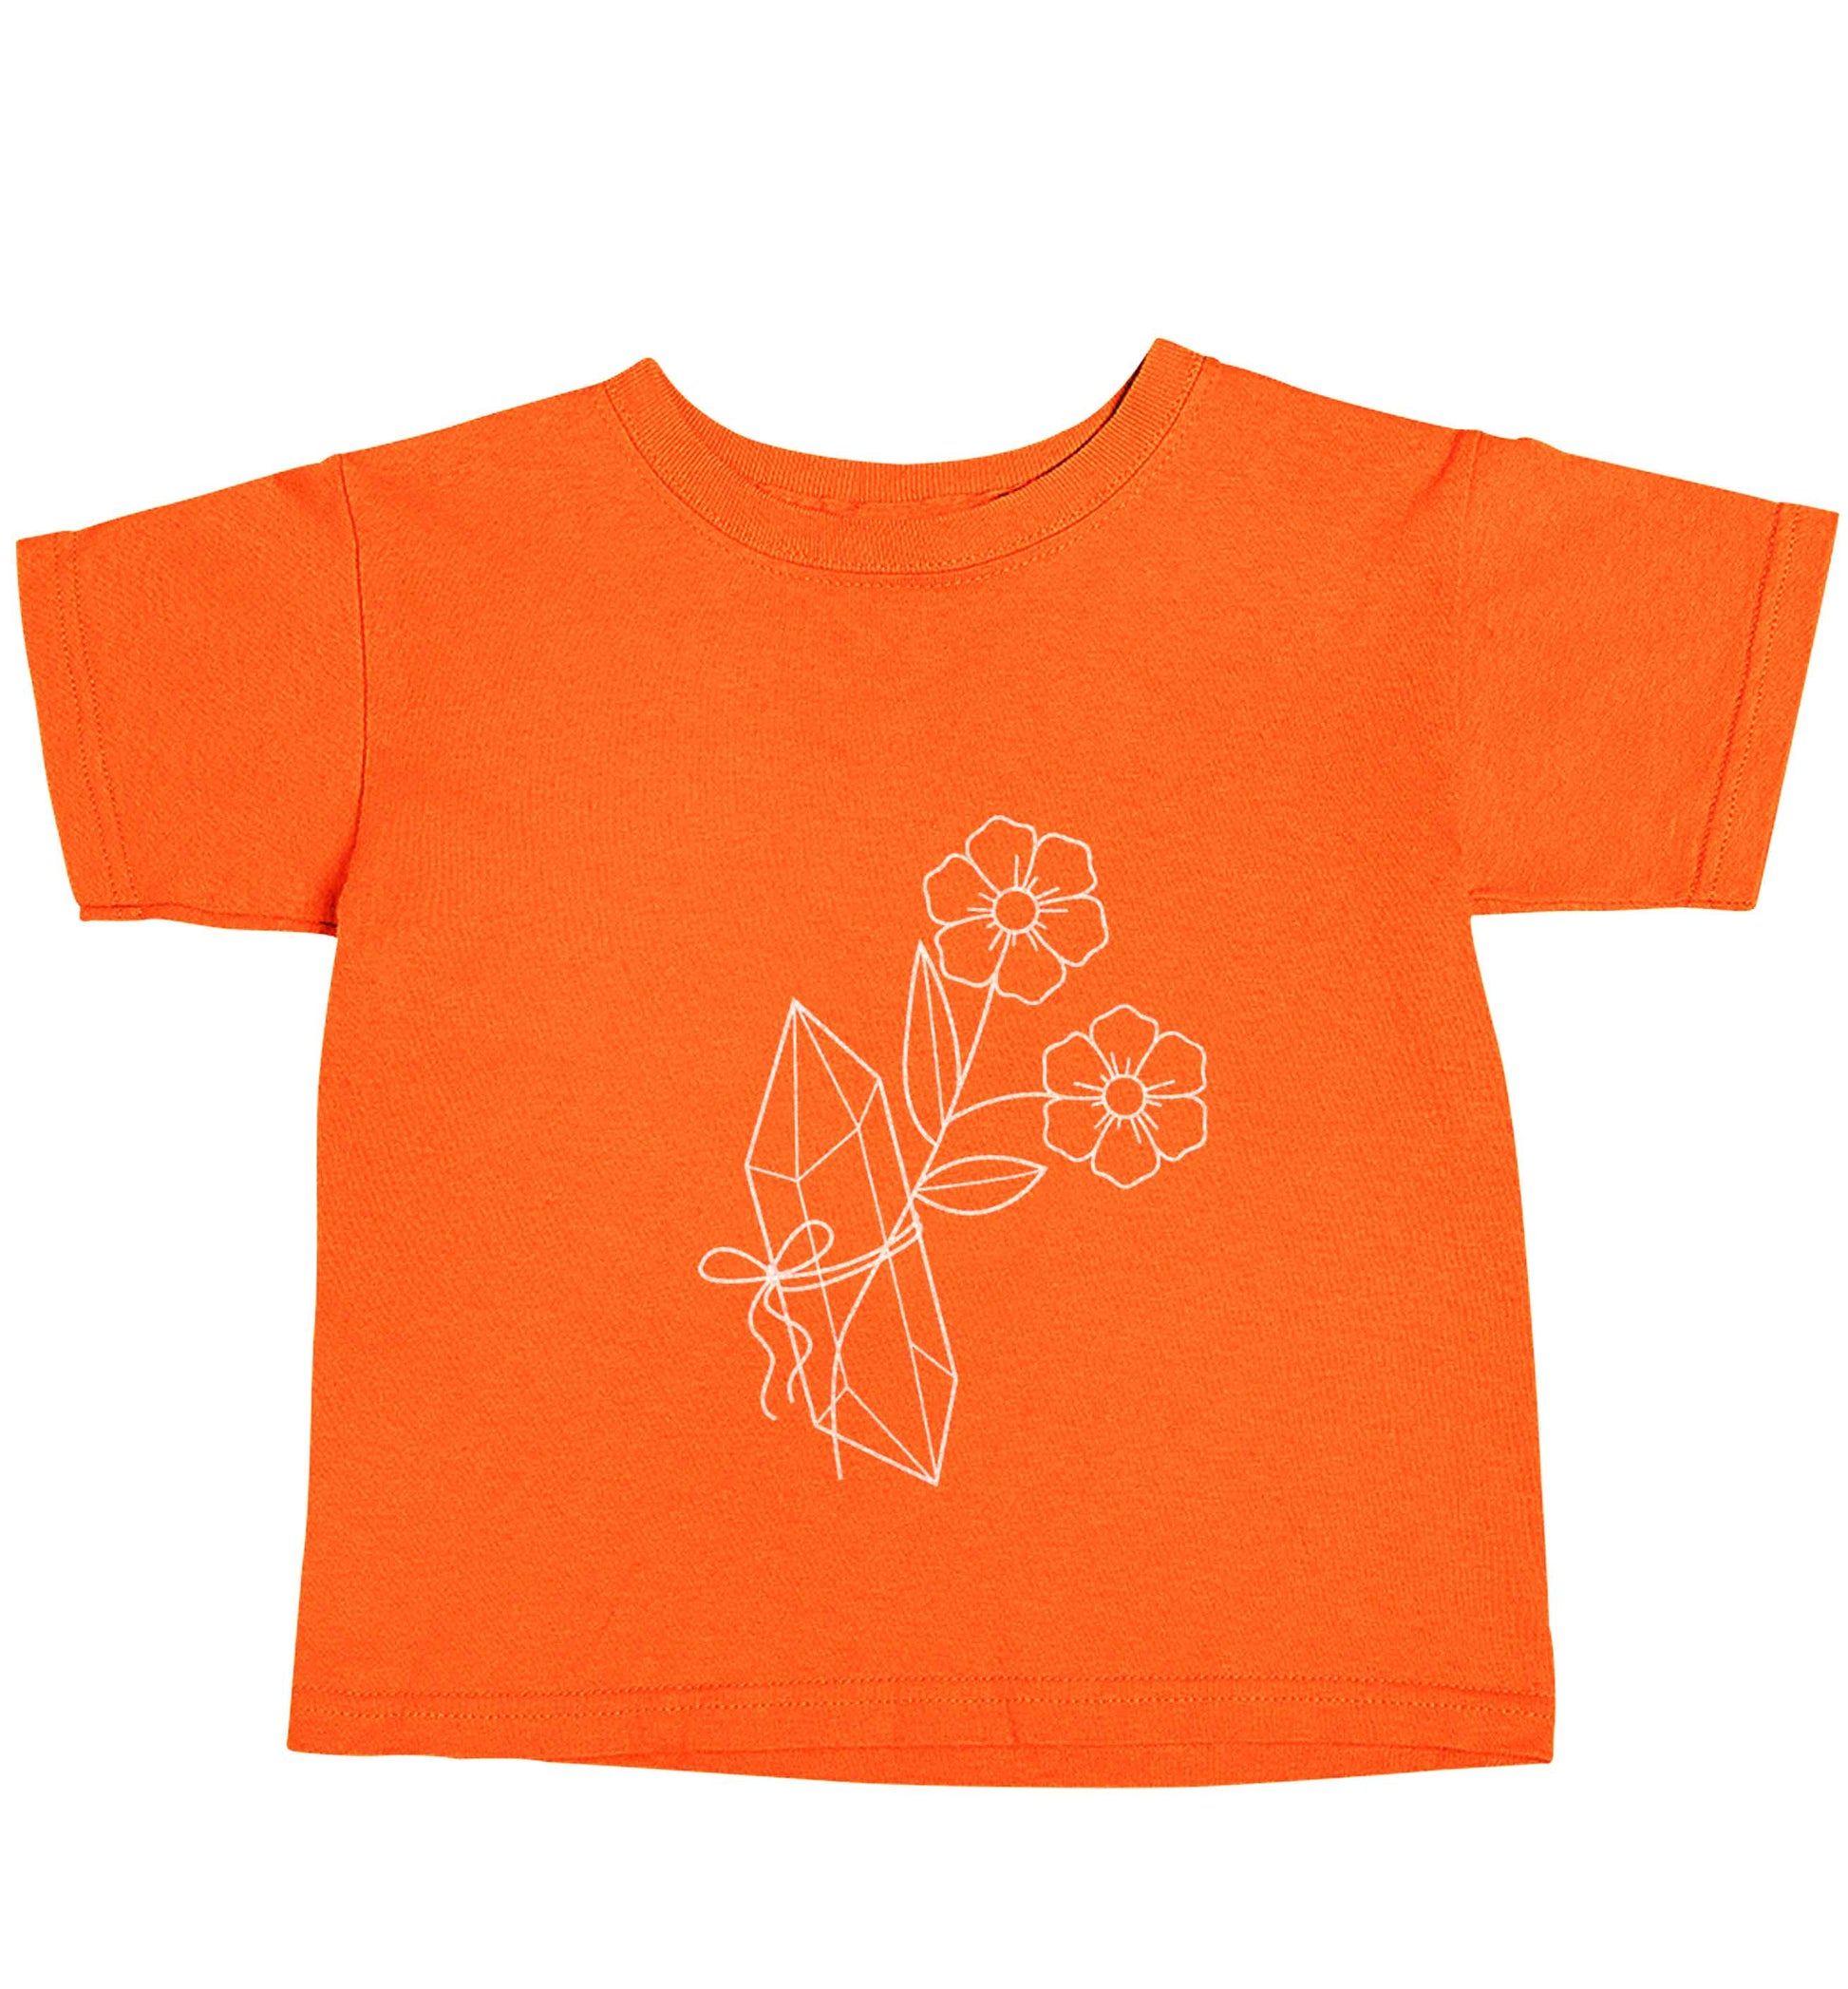 Crystal flower illustration orange baby toddler Tshirt 2 Years